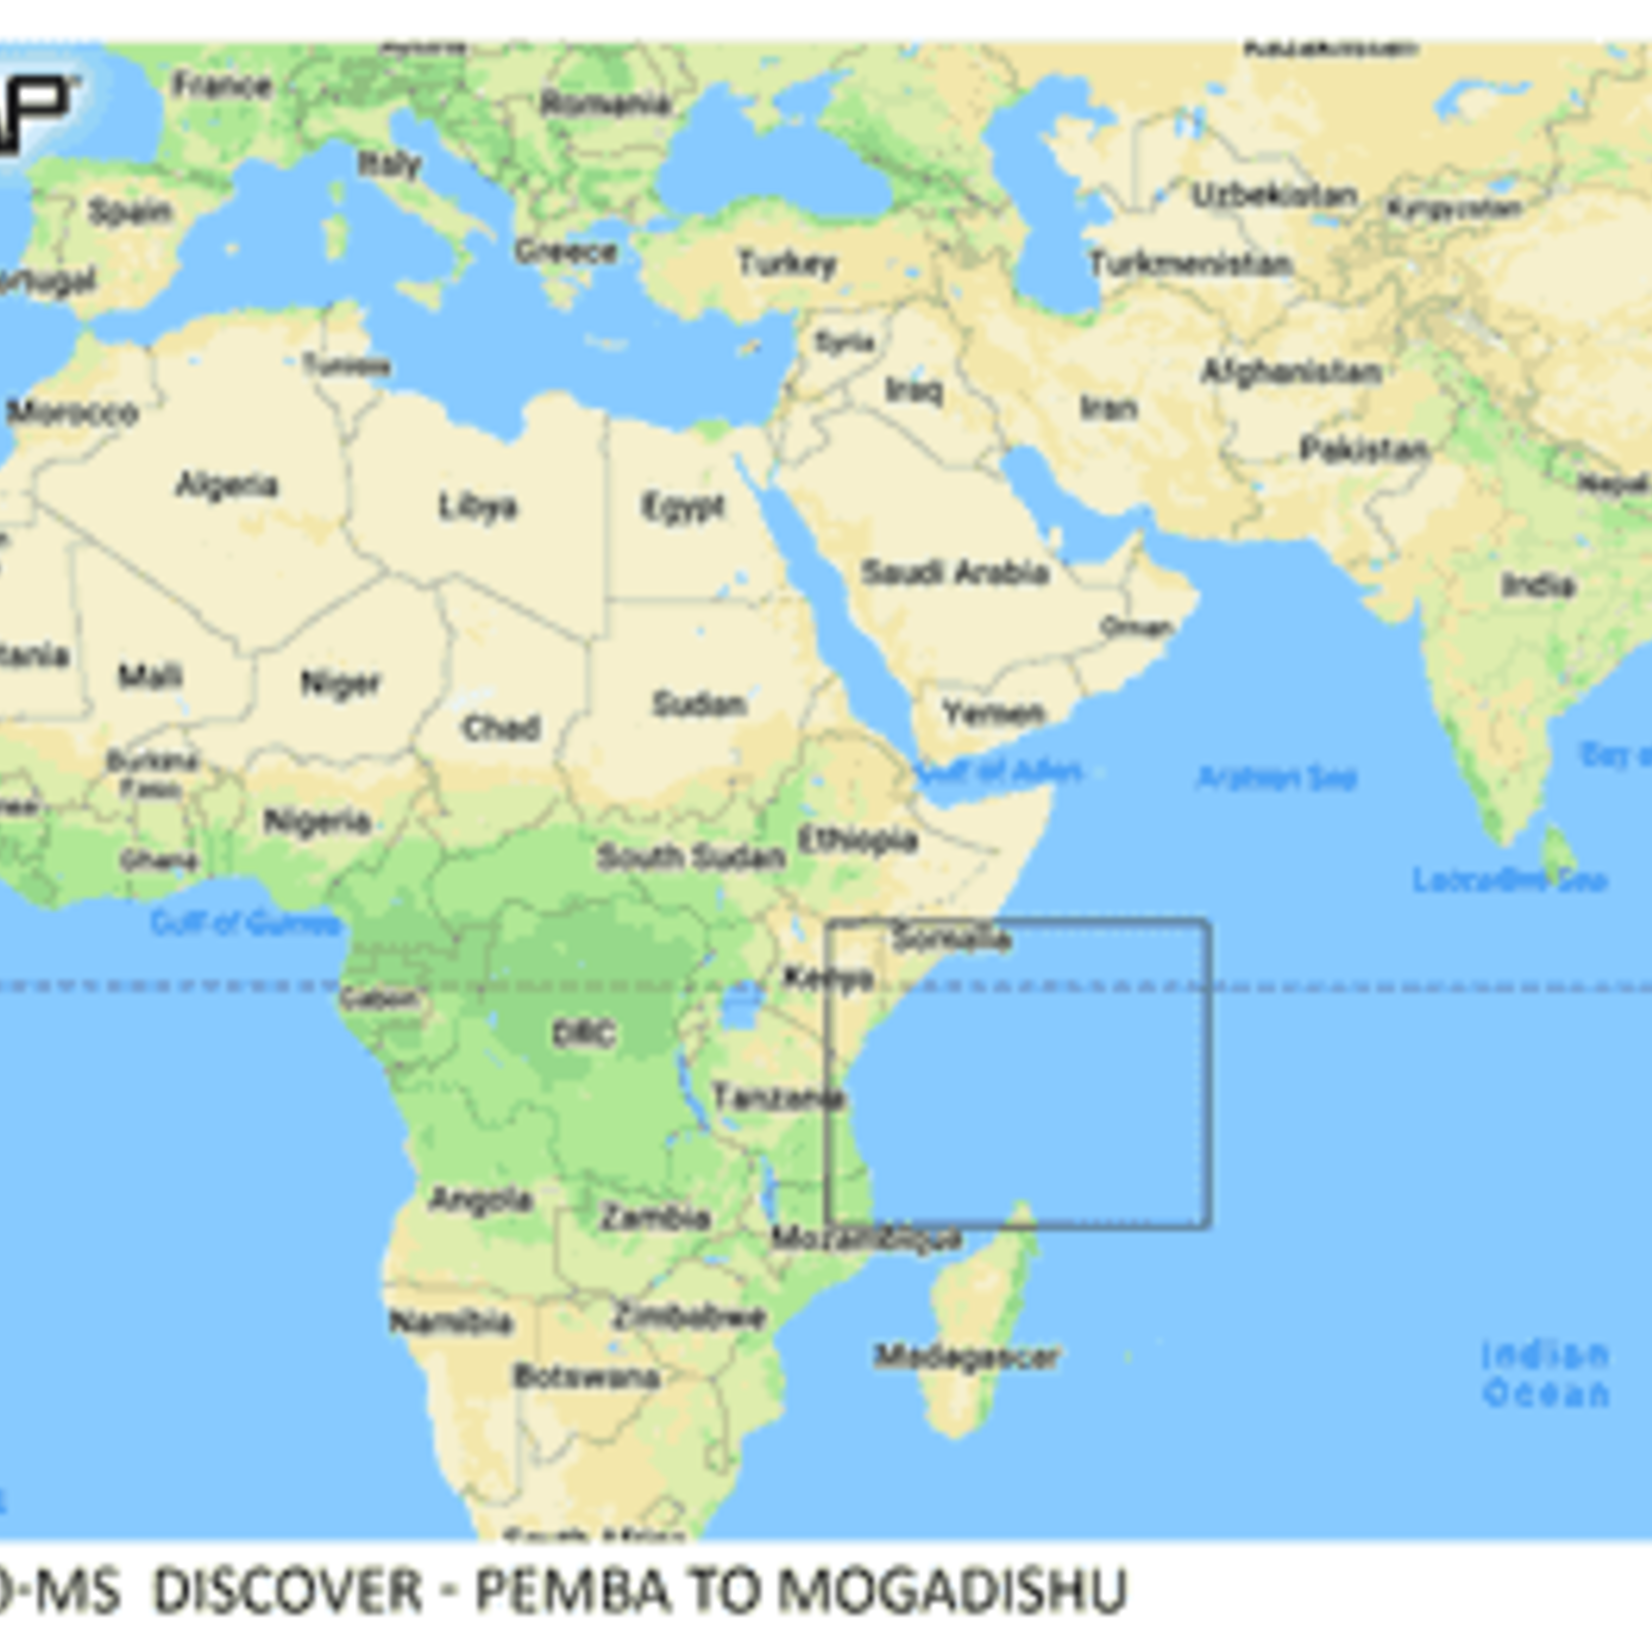 C-MAP DISCOVER - Pemba to Mogadishu